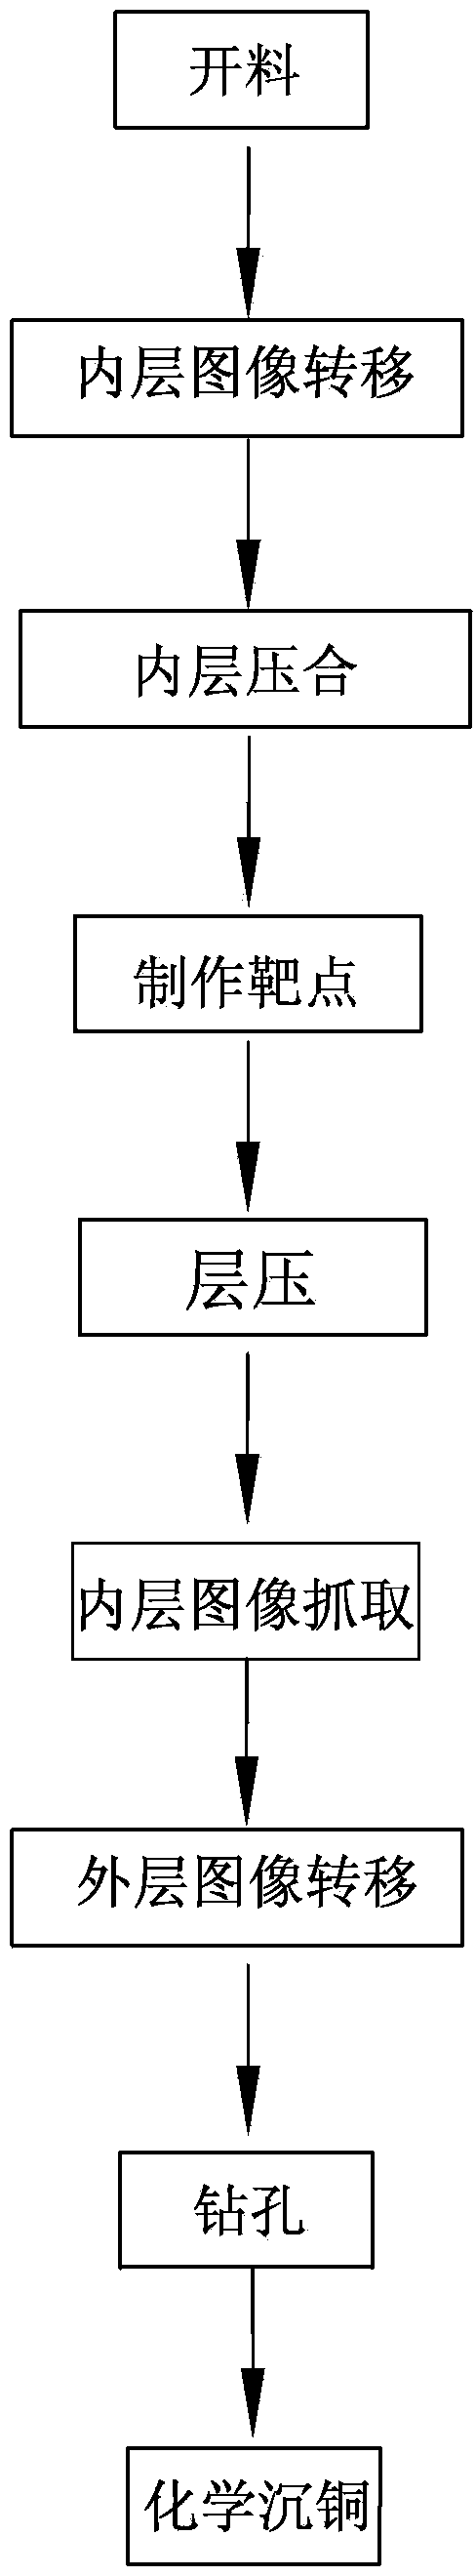 Manufacturing method of multi-layer PCB (printed circuit board)